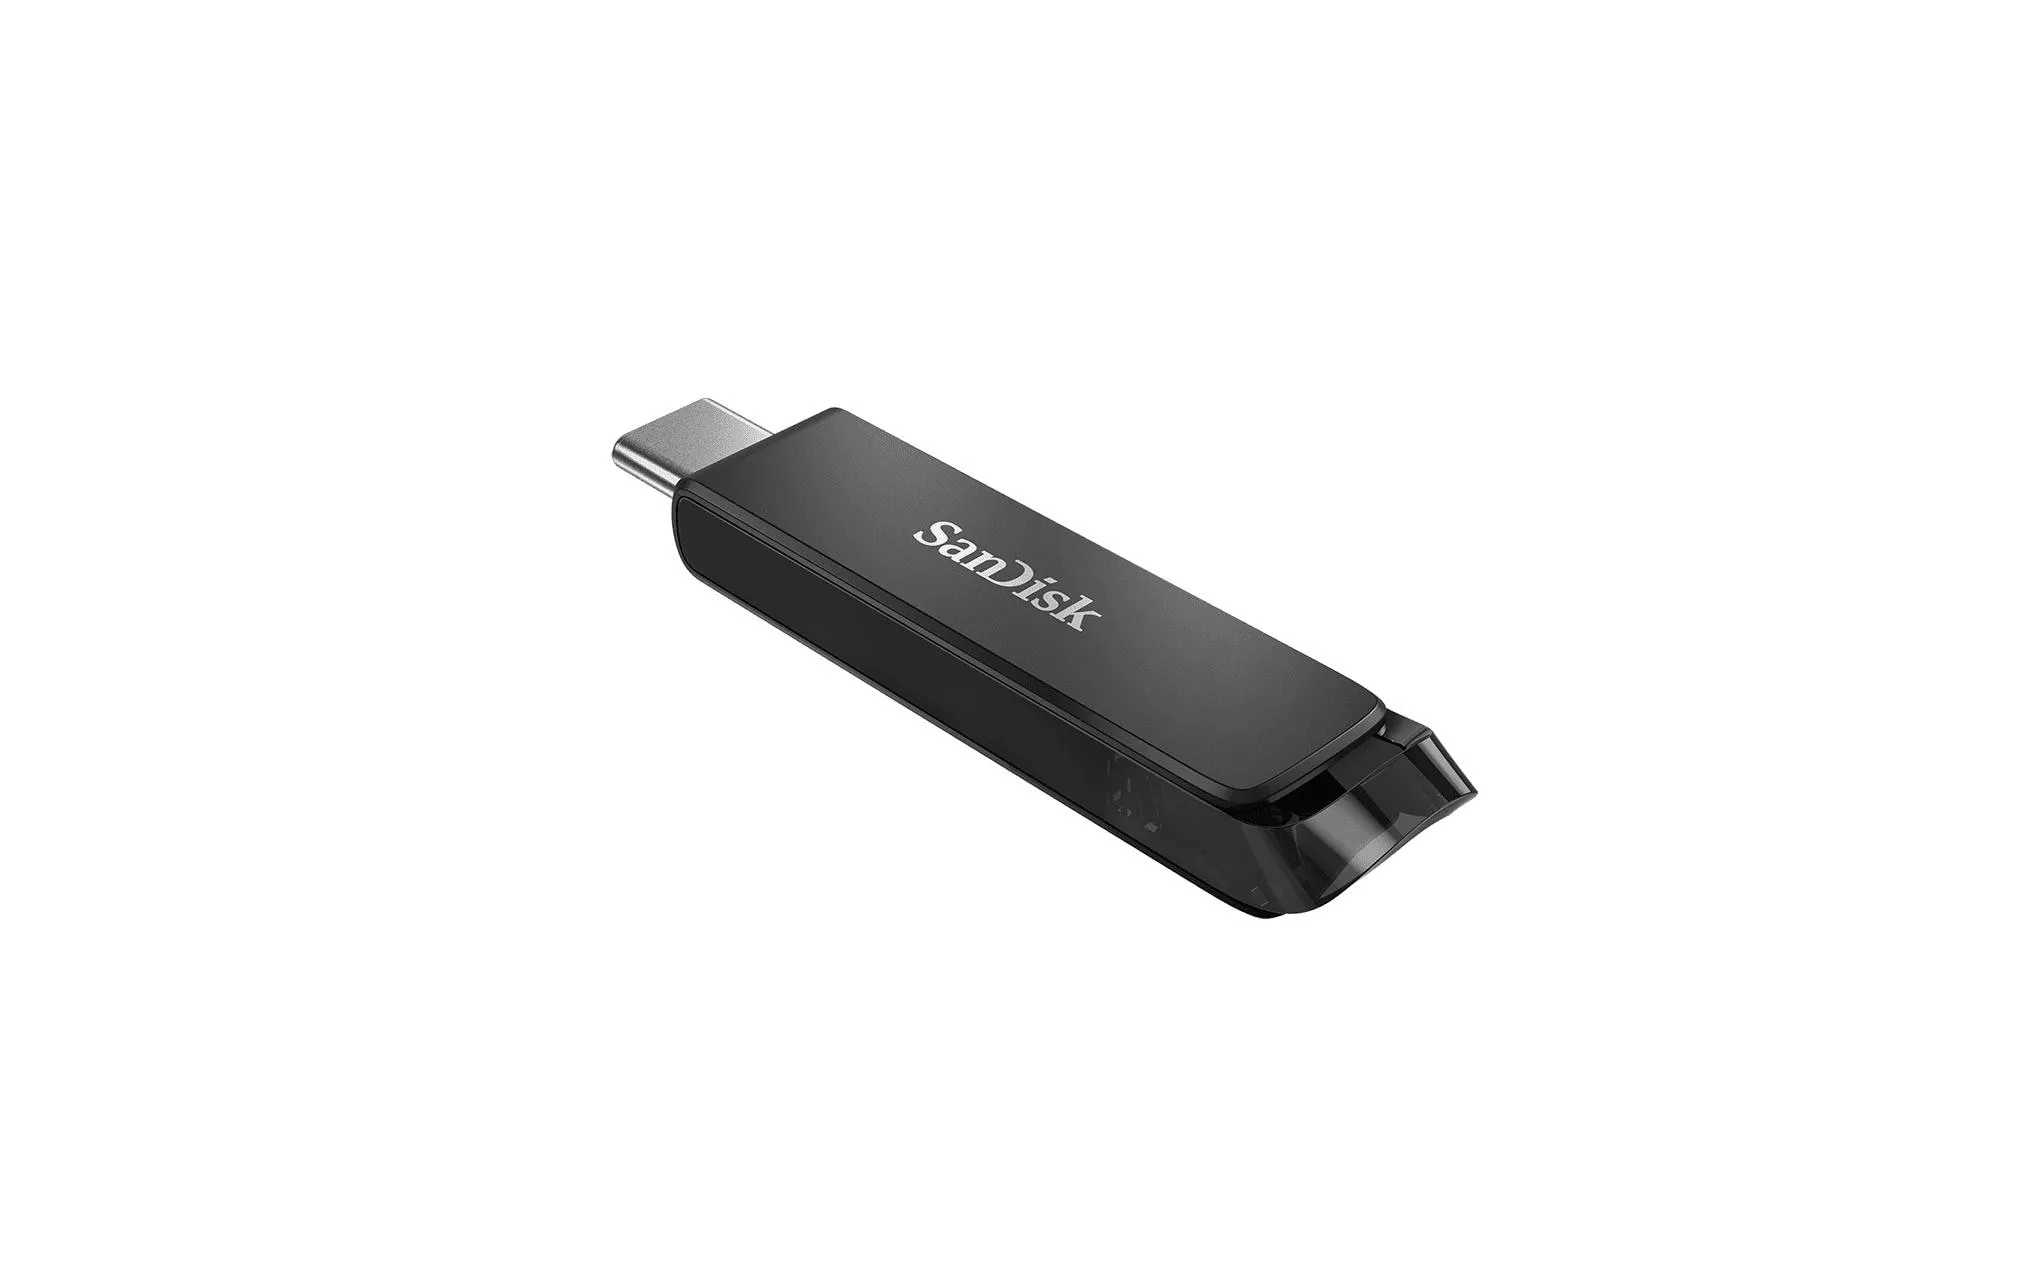 CLE USB SANDISK ULTRA FIT 3.0 256Gb NOIR